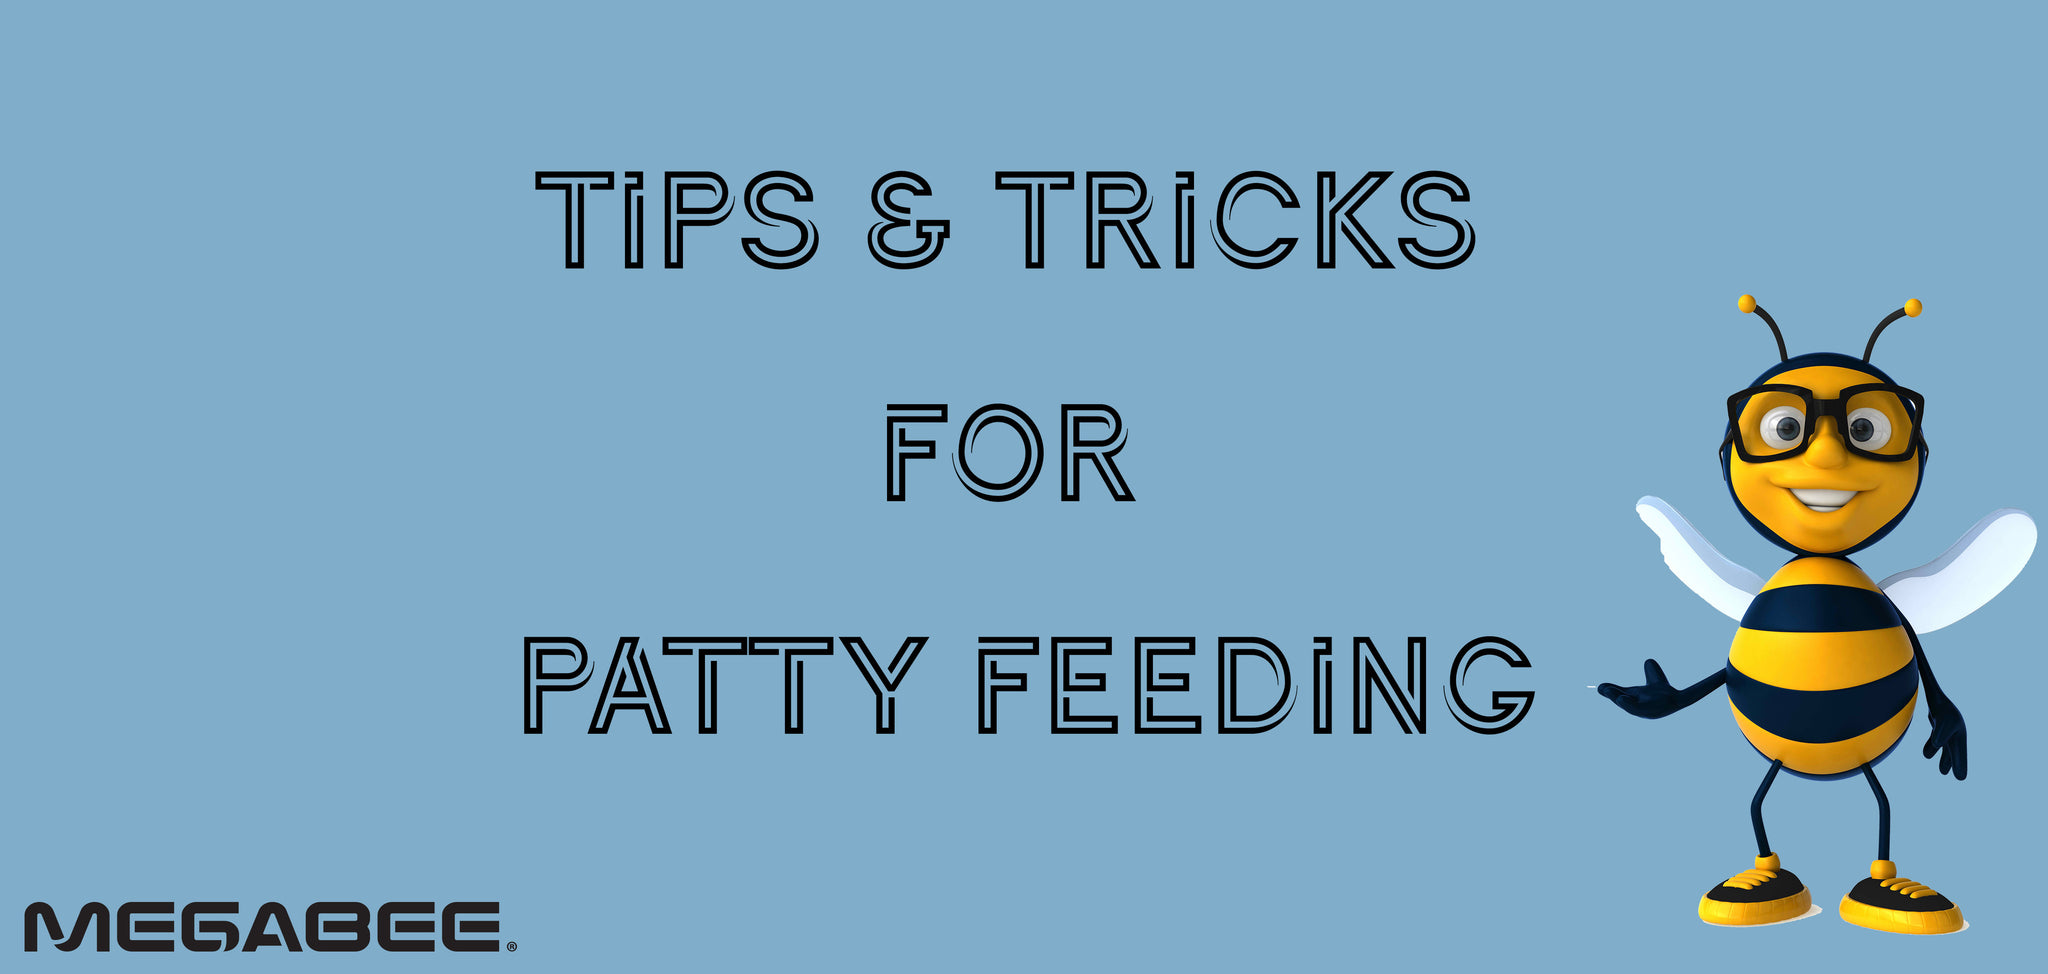 Tips & Tricks for Patty Feeding